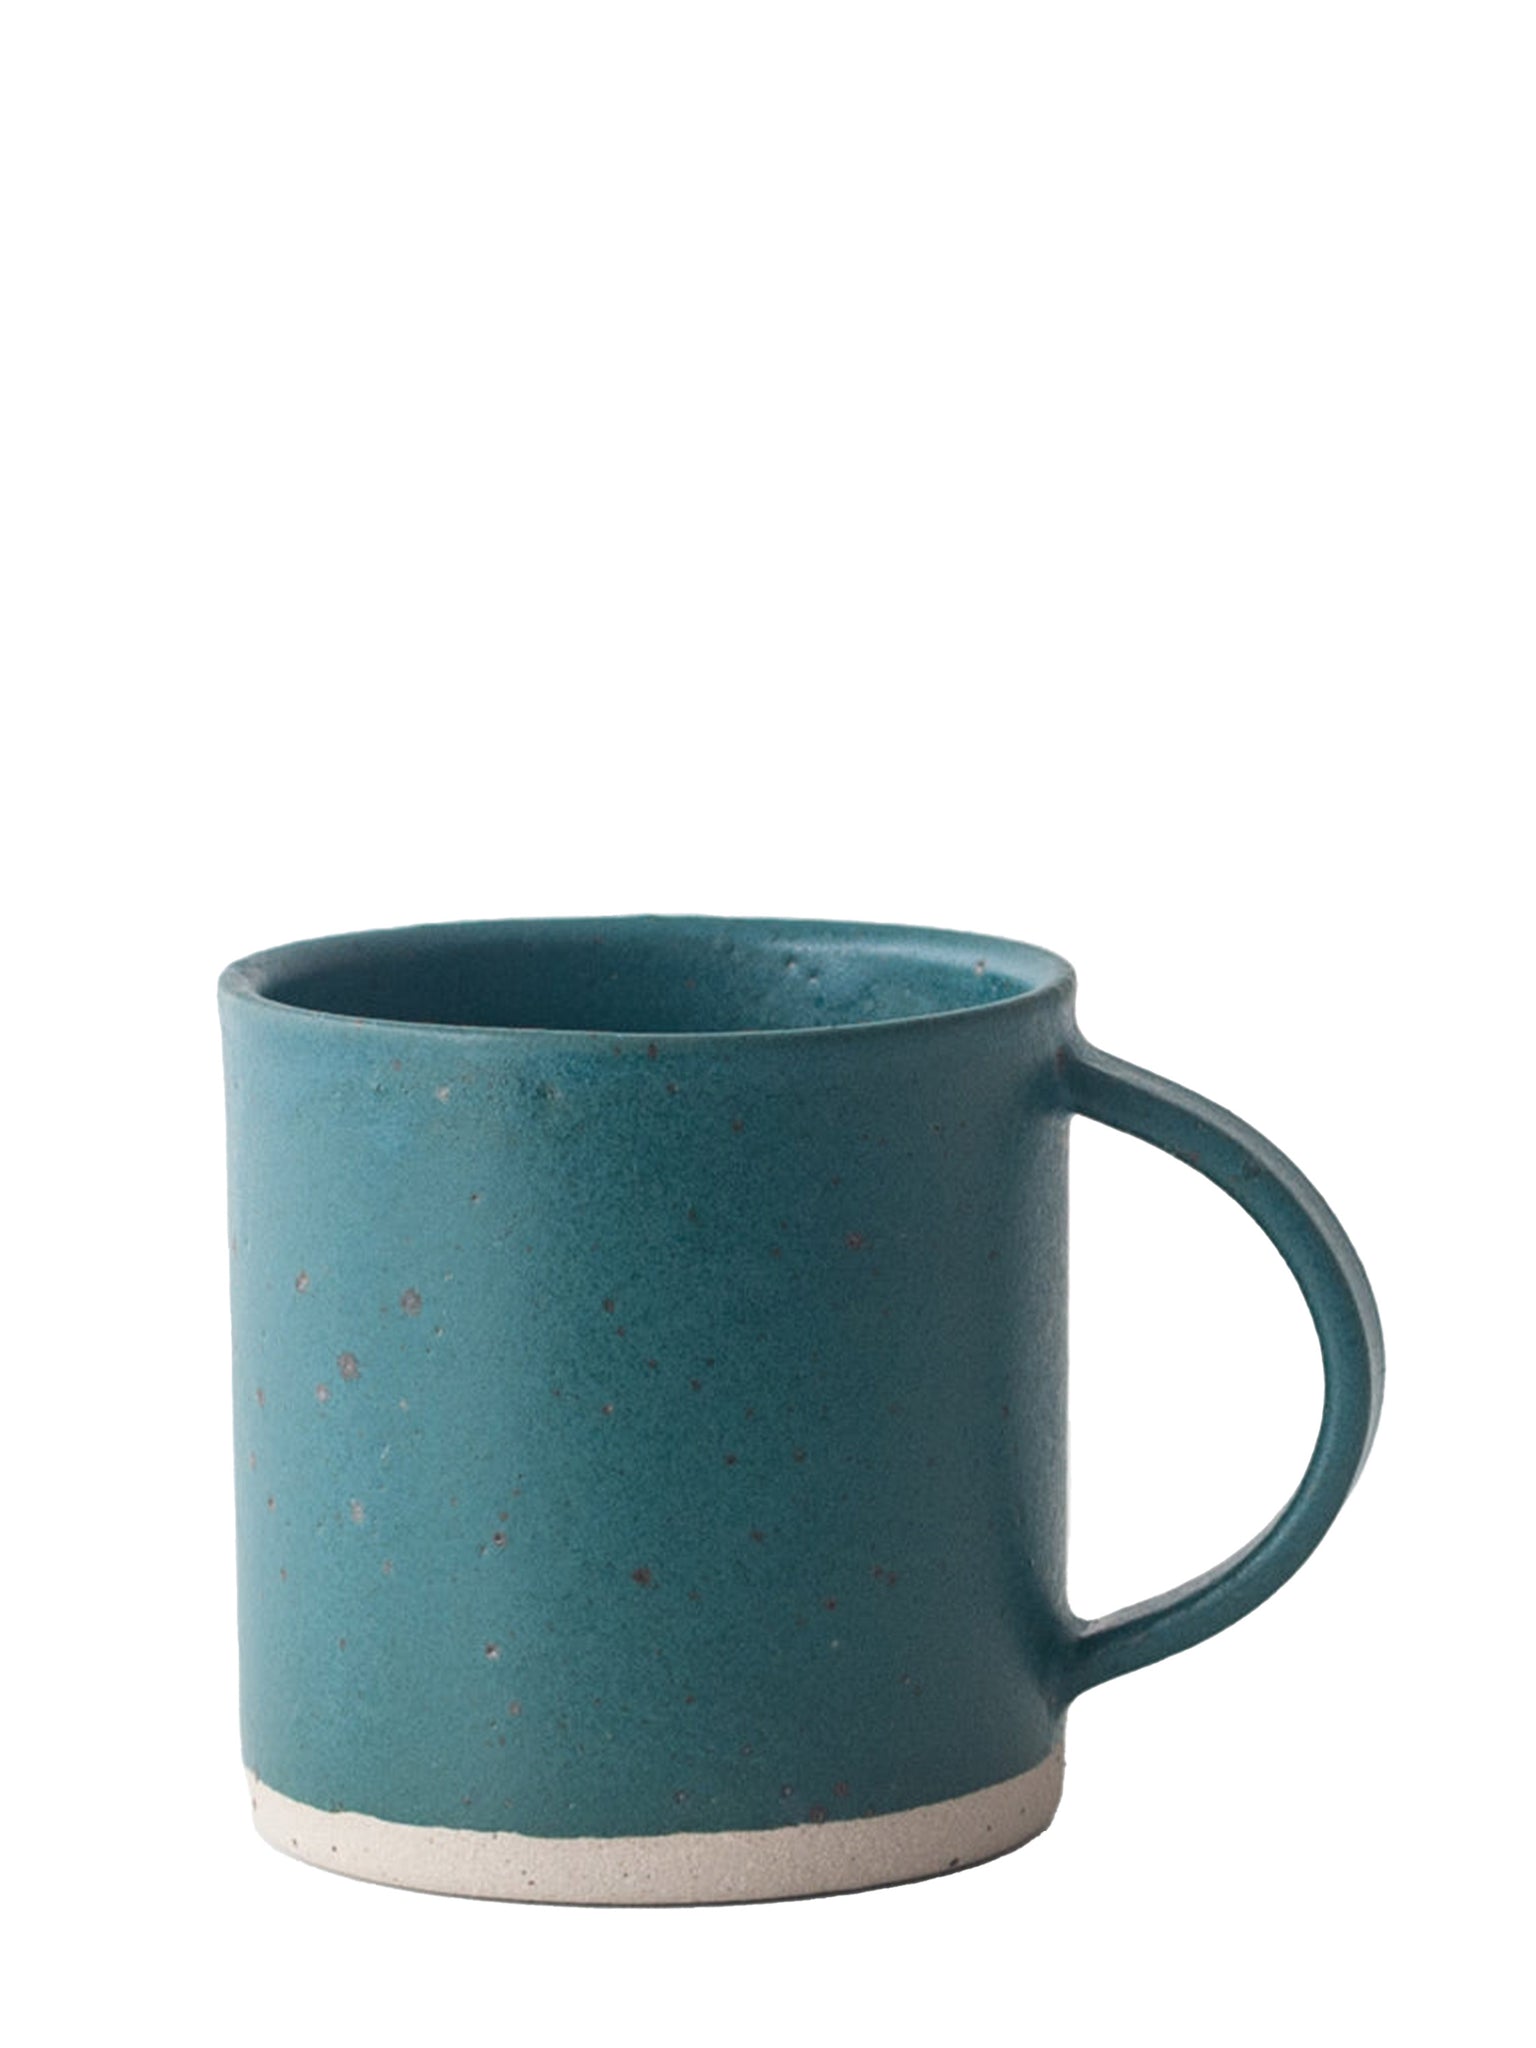 Green hand thrown stoneware ceramic mug by Dor & Tan